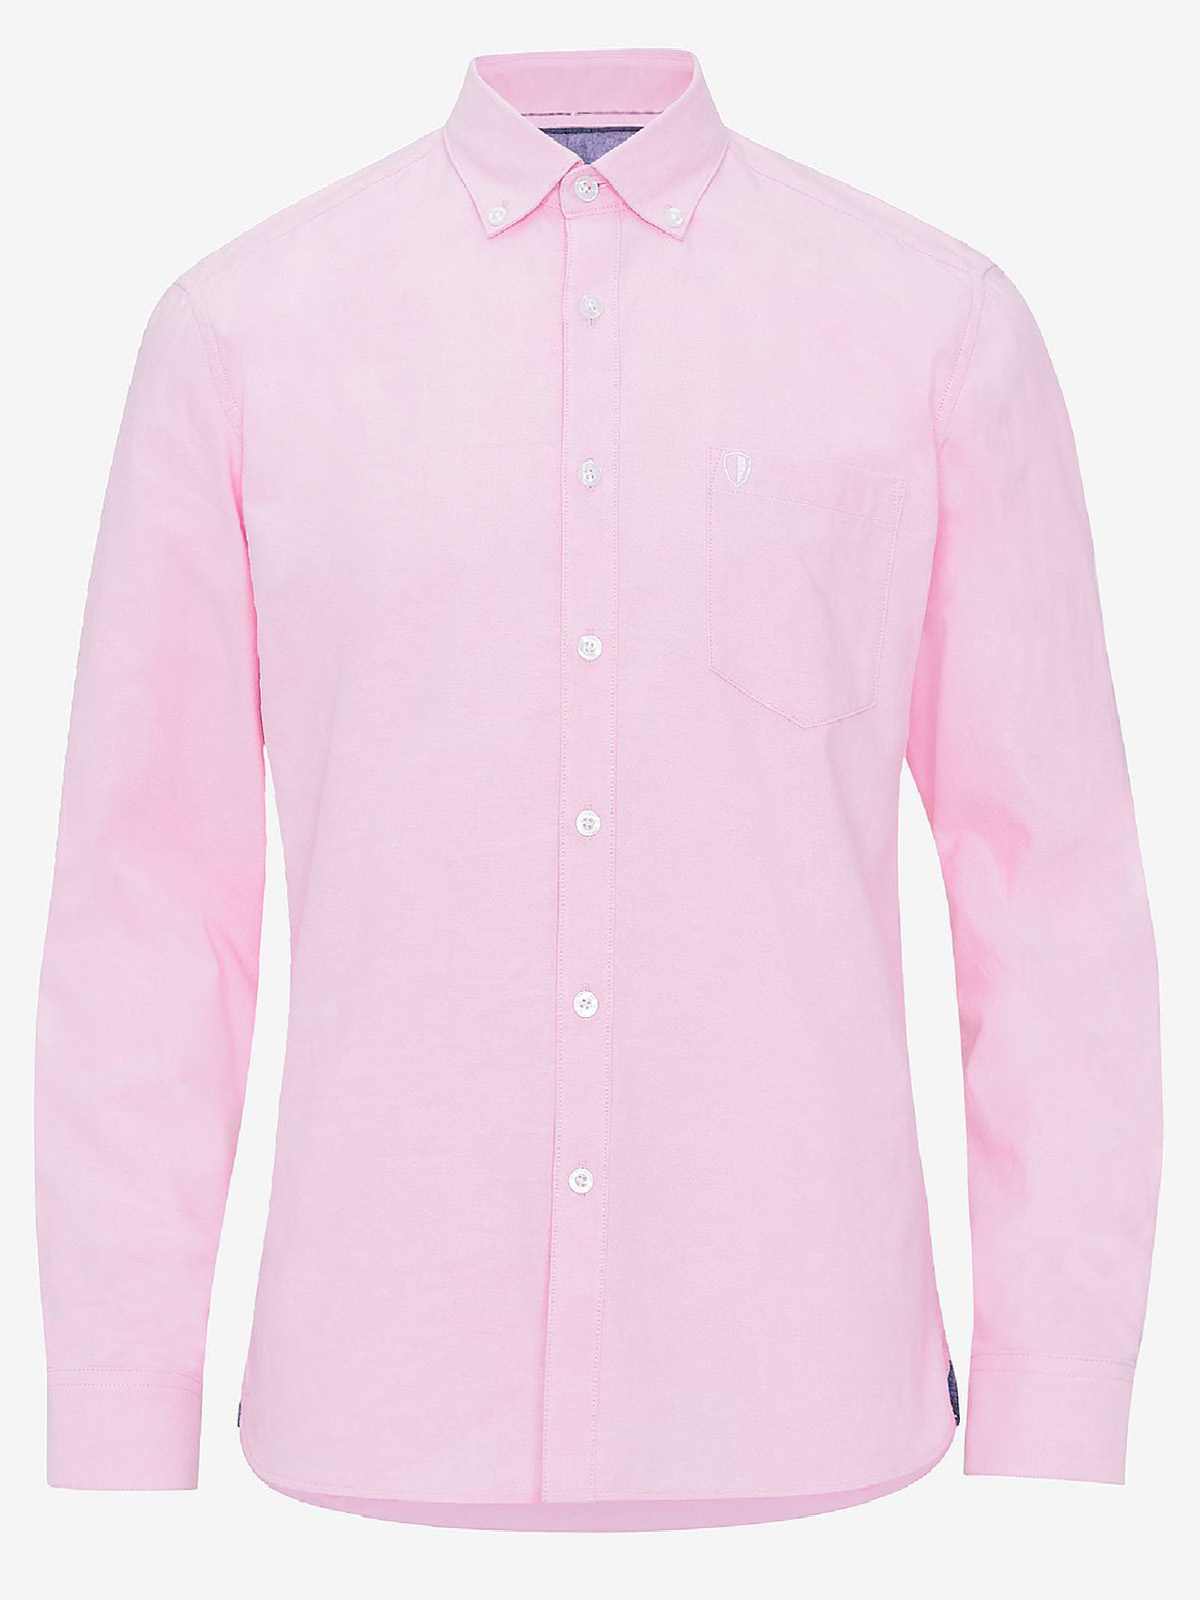 Ellos - - ELLOS PINK Mens Pure Cotton Oxford Shirt - Plus Size 4XL to 6XL